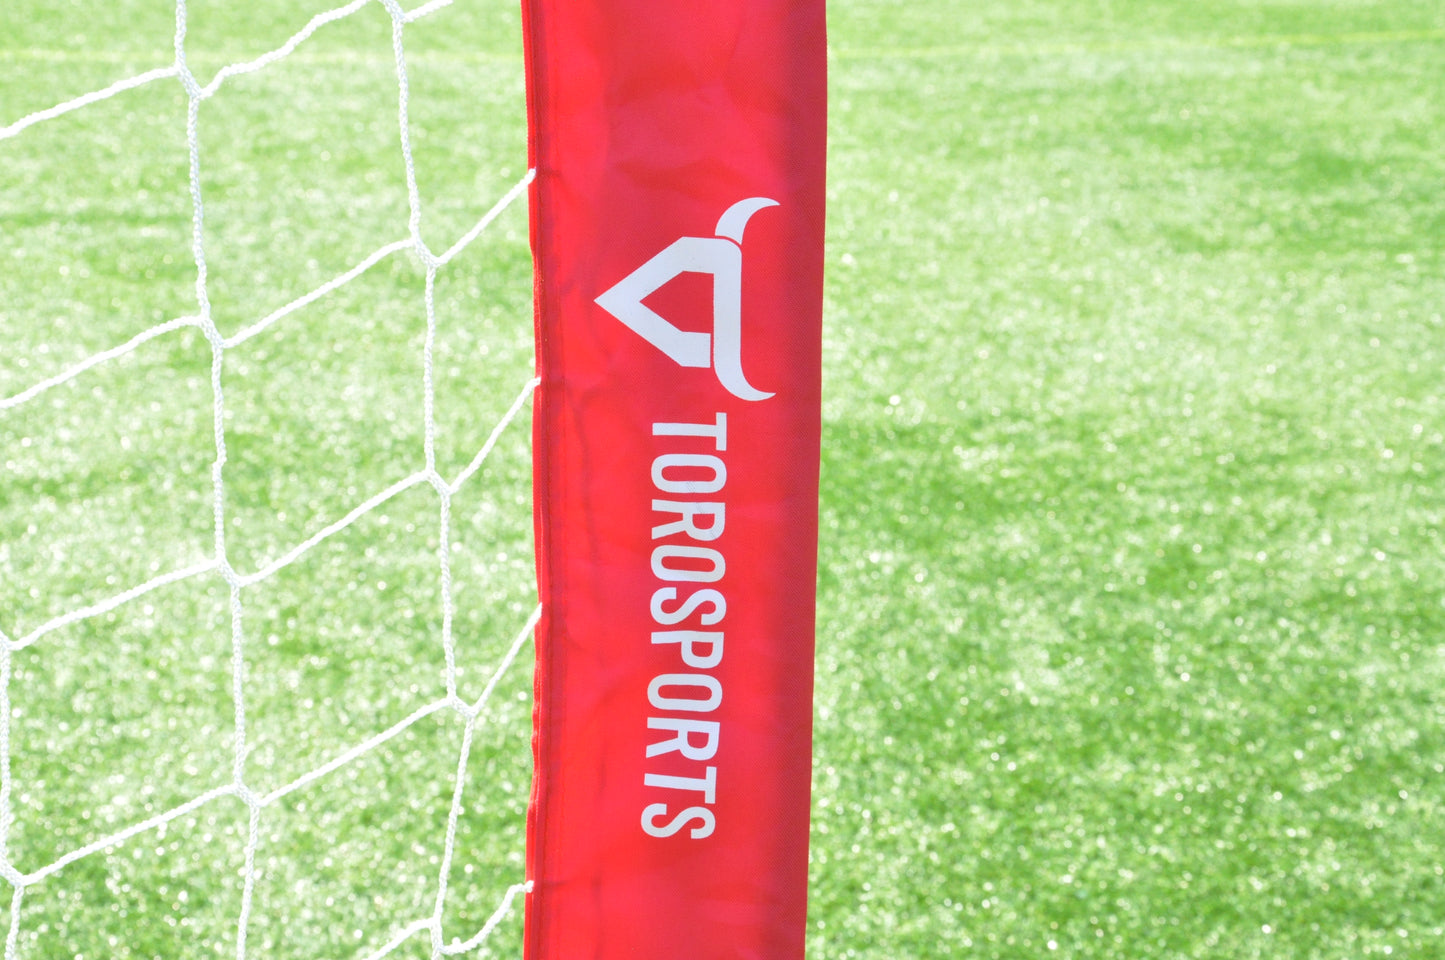 Torosports Flex Elite Soccer Goal 3m x 2m: Portable Goal for Football & Futsal